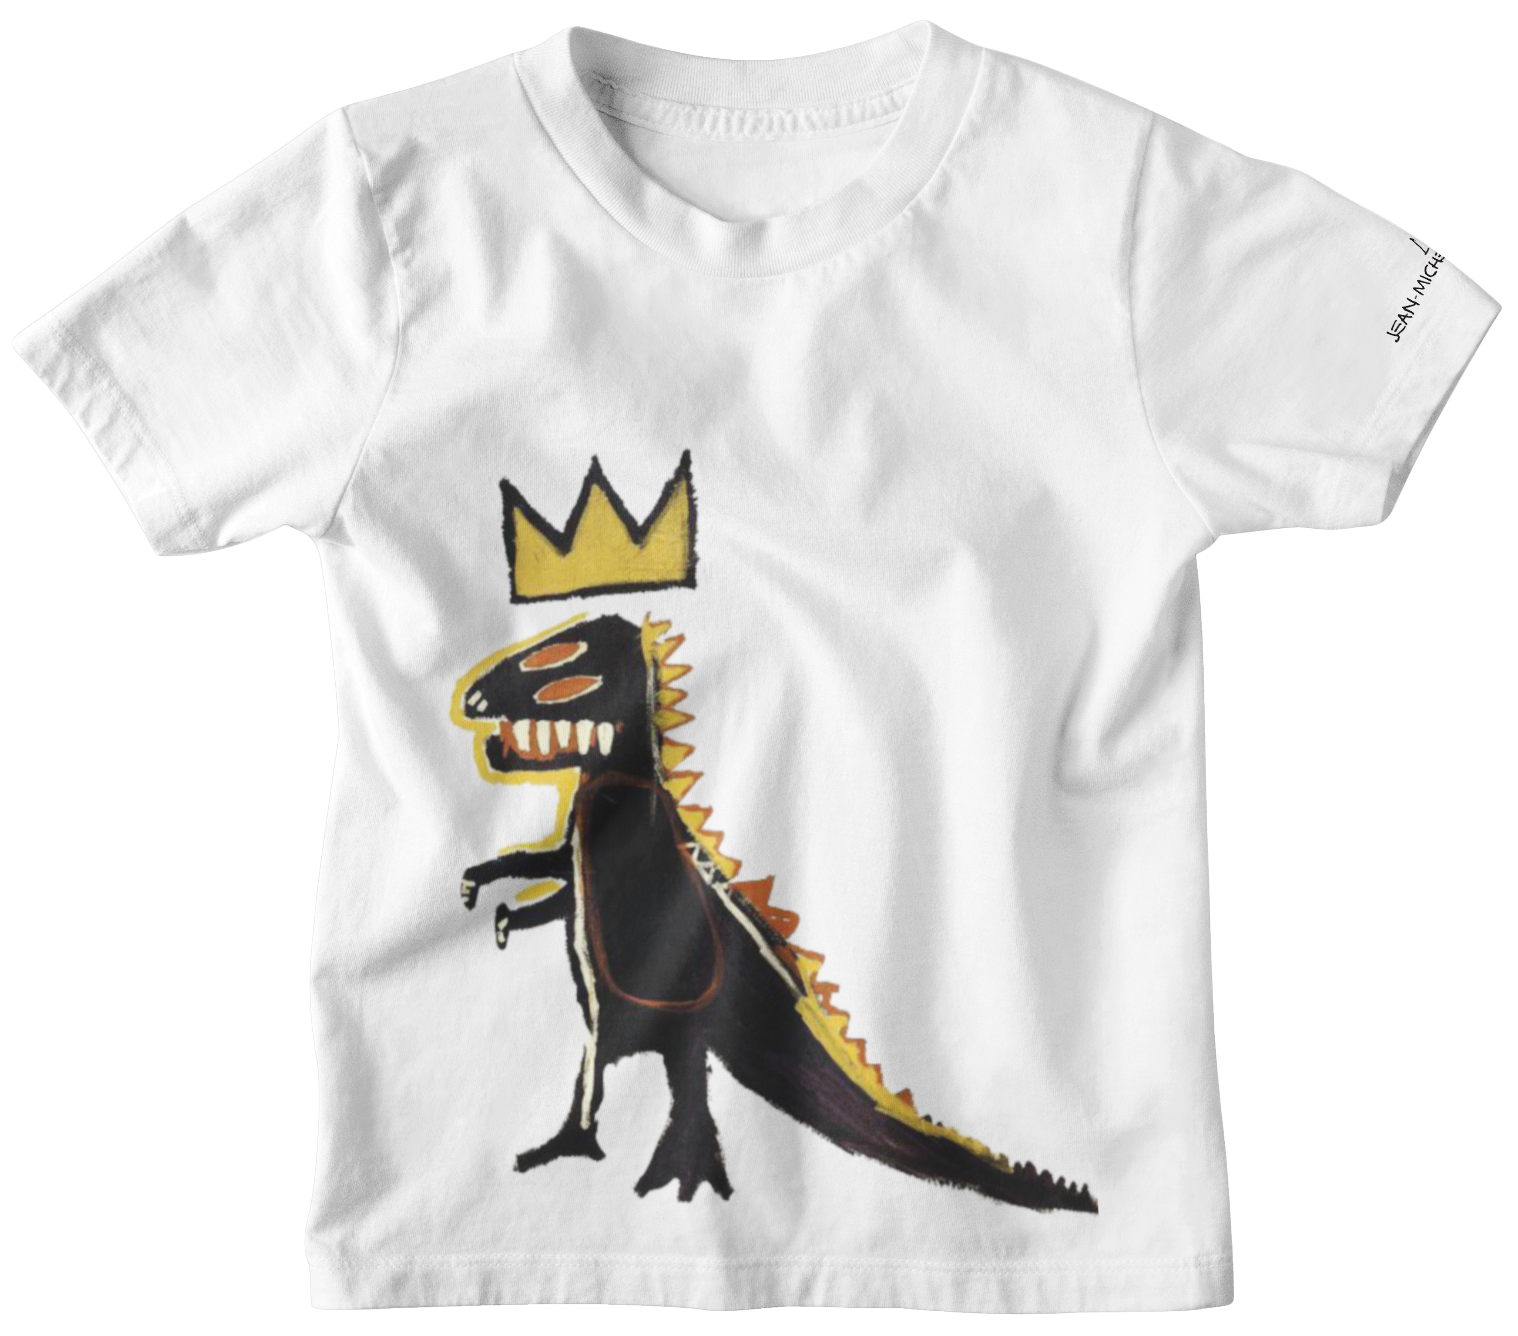 Jean-Michel Basquiat Dinosaur T-Shirt (Kids) - The Brant Foundation Shop